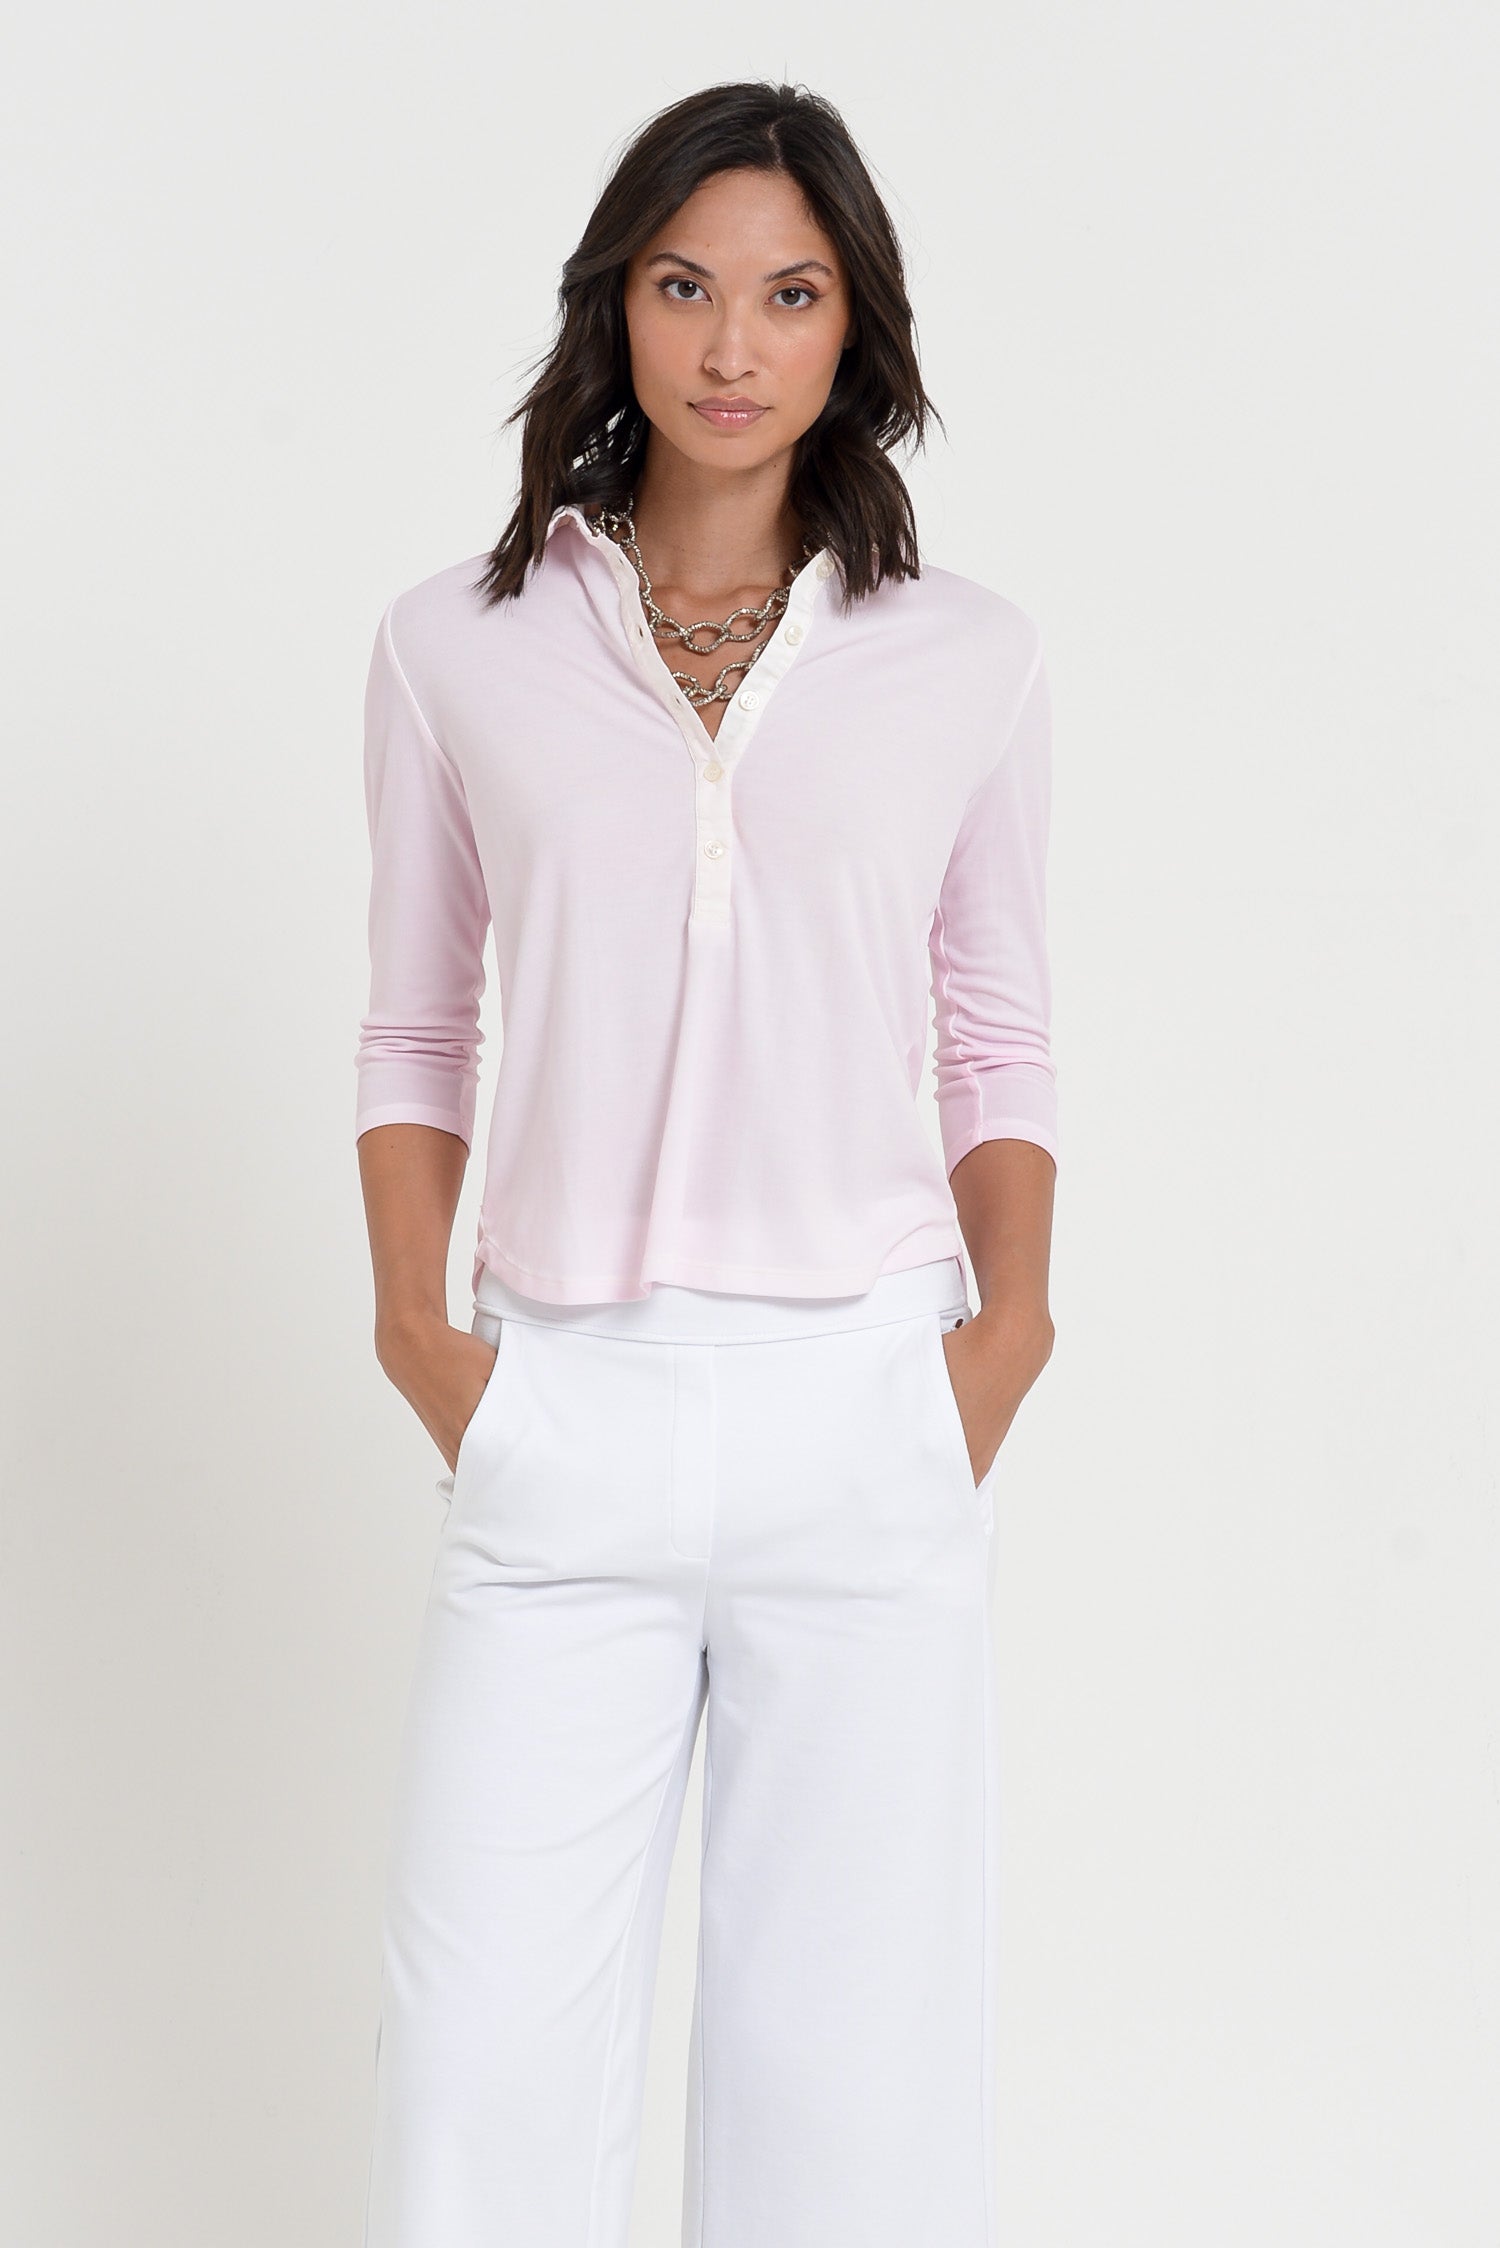 Cove Polo - Women's Short Sleeve Polo Shirt - Rose